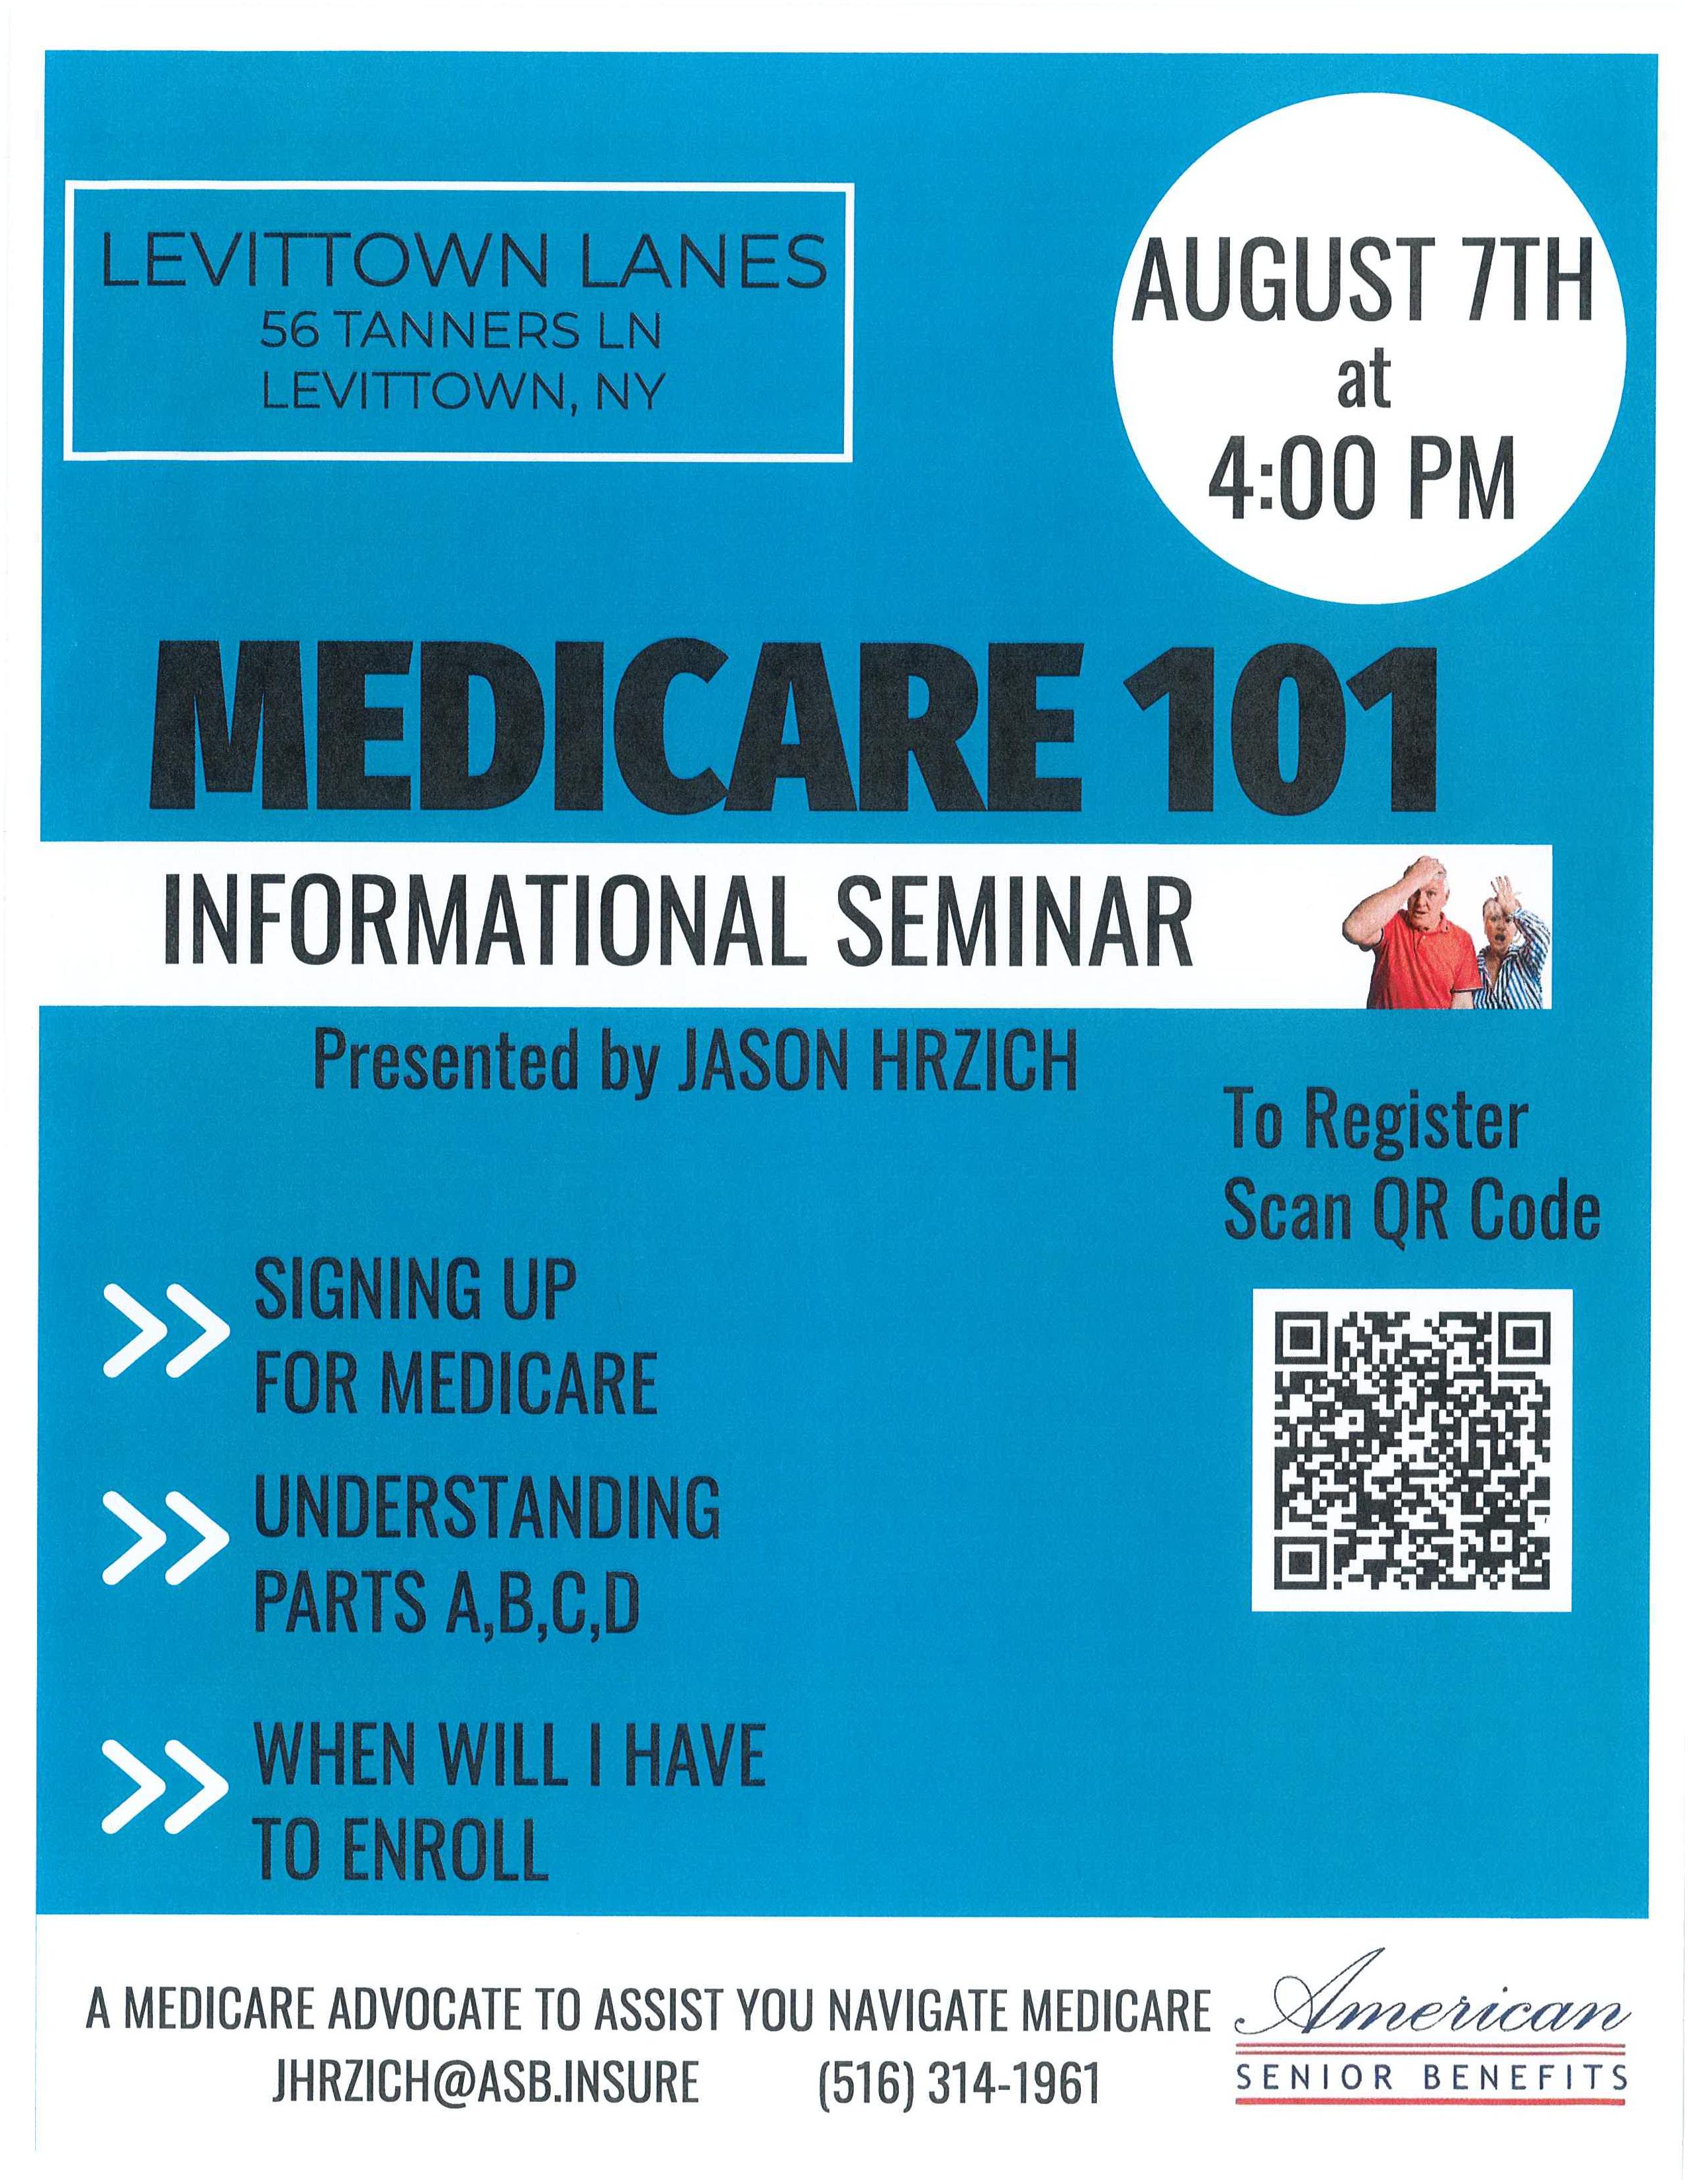 Medicare 101 - Informational Seminar - Aug 7th at 4PM at Levittown Lanes